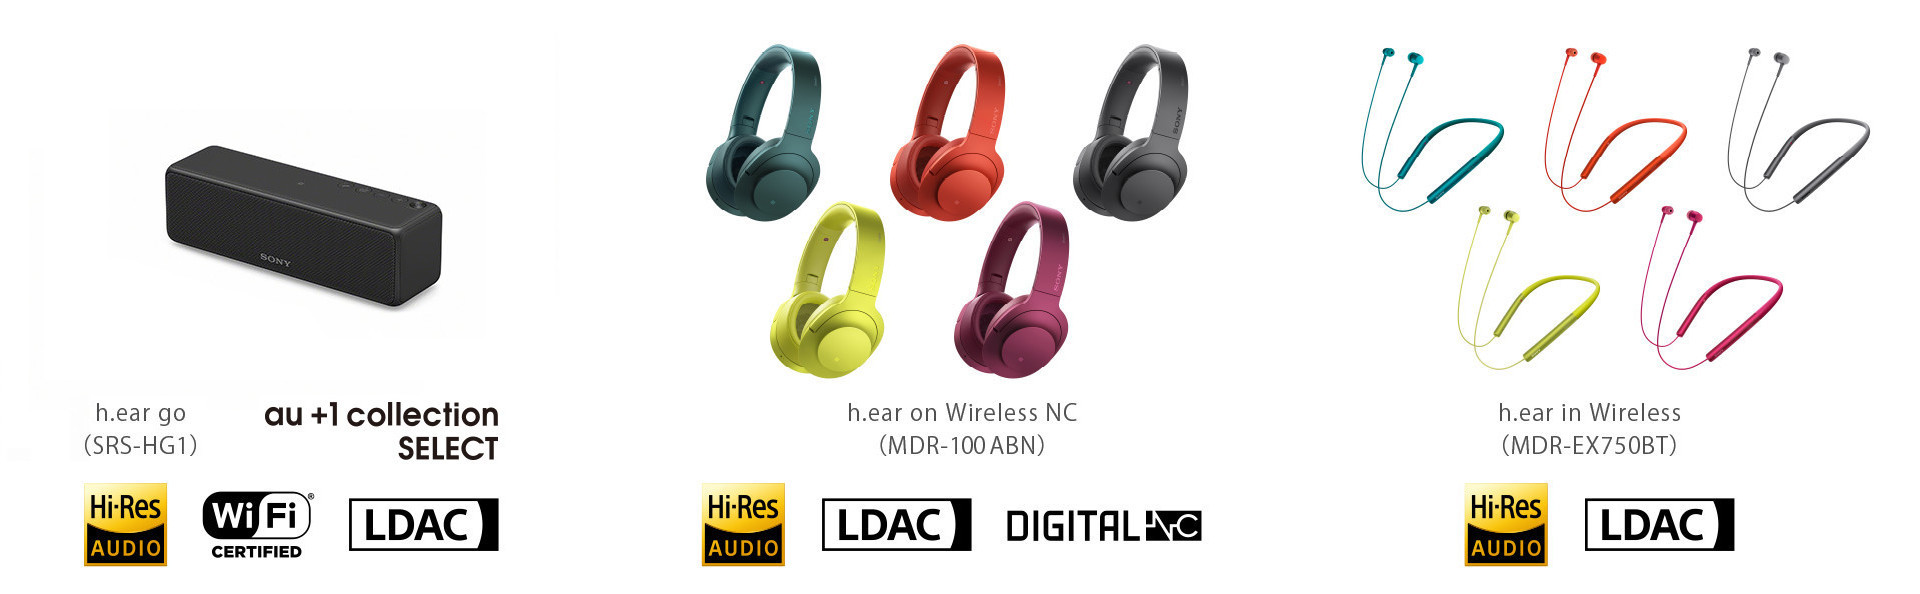 h.ear go（SRS-HG1）・h.ear on Wireless NC（MDR-100ABN）・h.ear in Wireless（MDR-EX750BT）